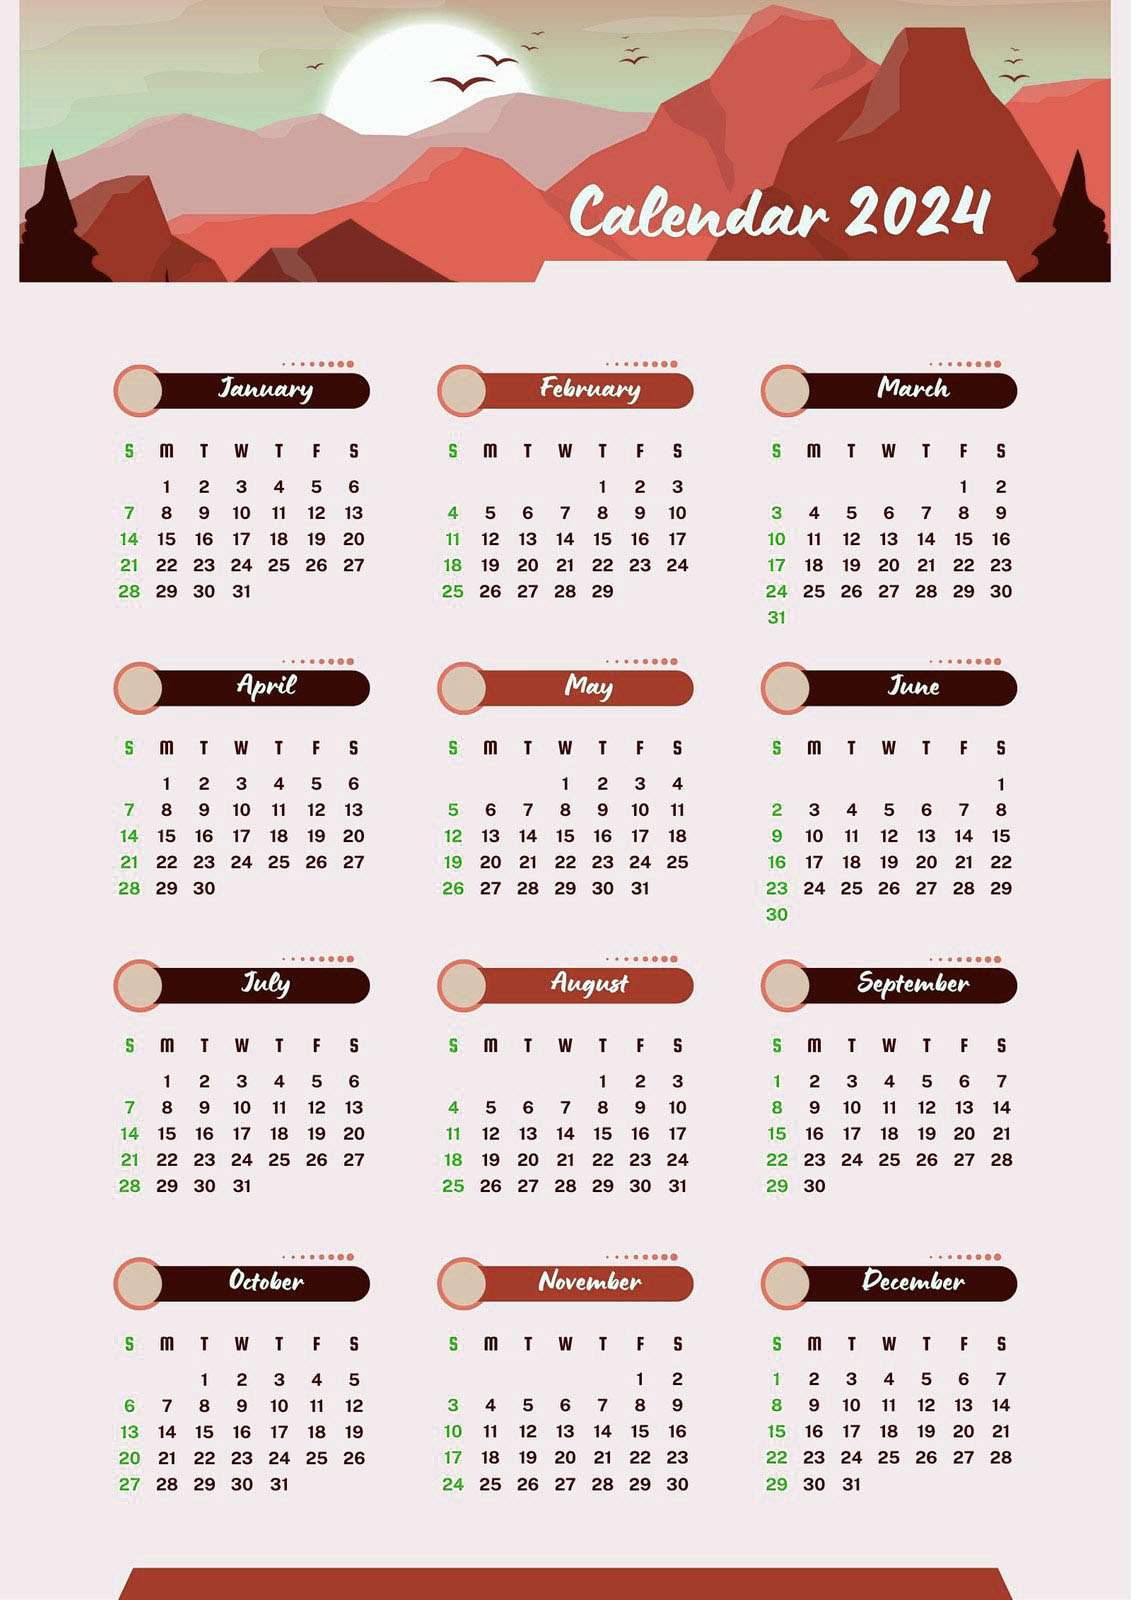 2024 Calendar Yearly Agenda Plan